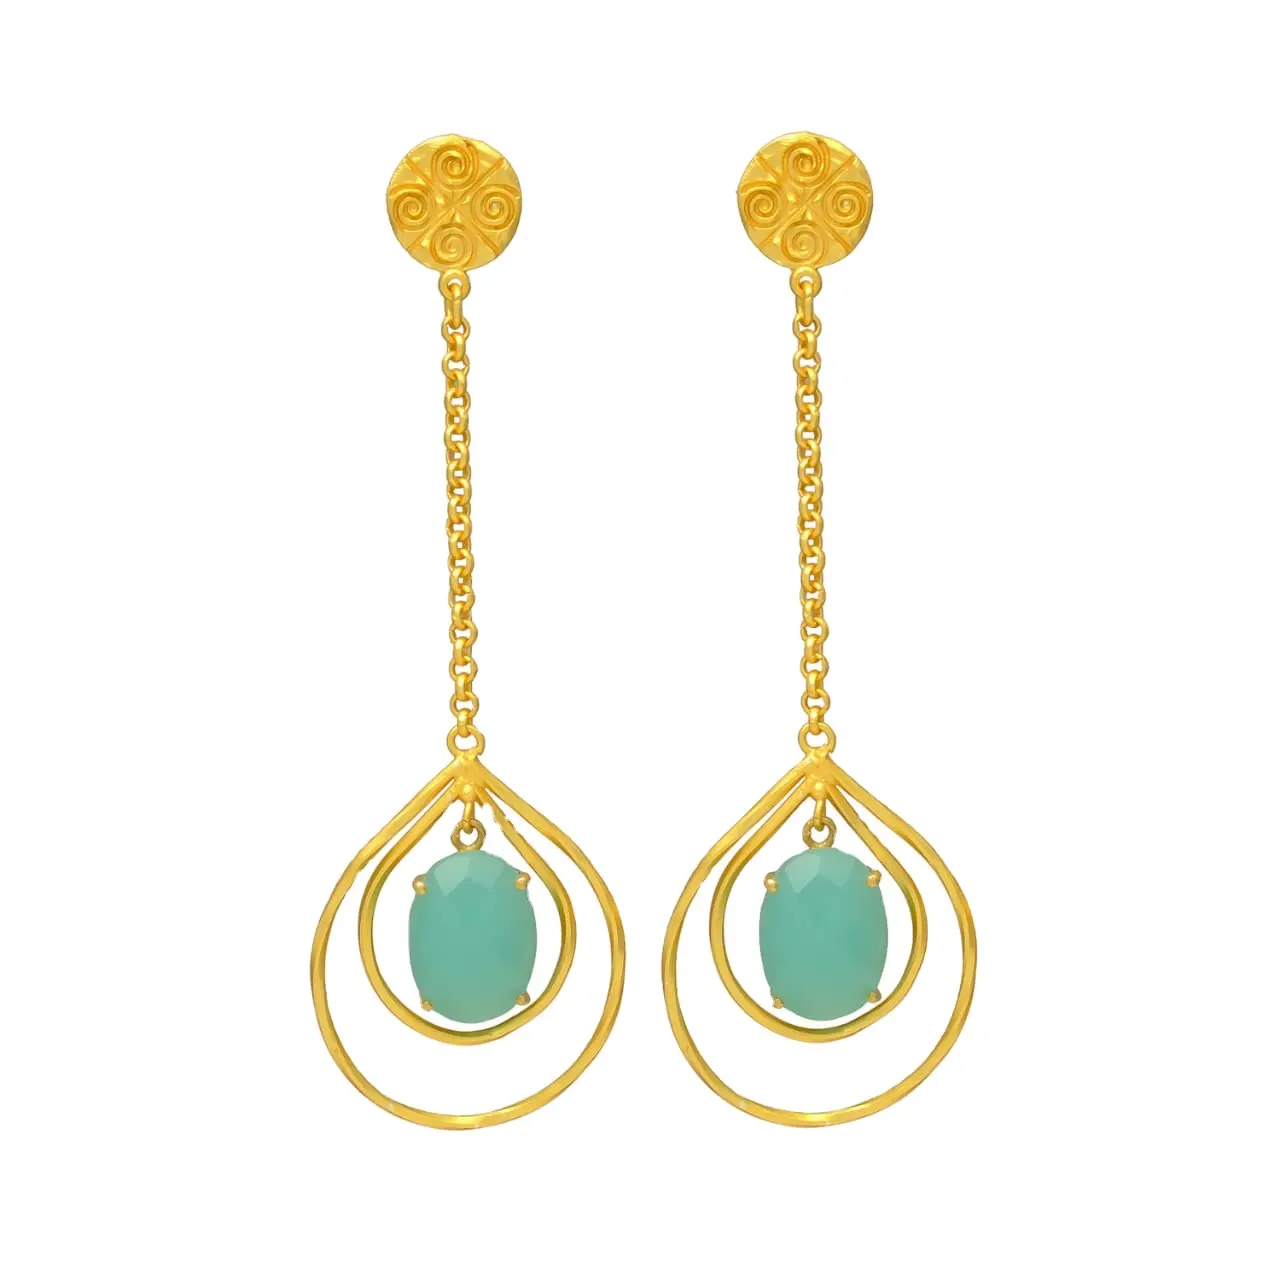 Ocean Serenade: Enchanting Two-Tone Gold Earrings with Aqua Green Stones earrings for women and girl